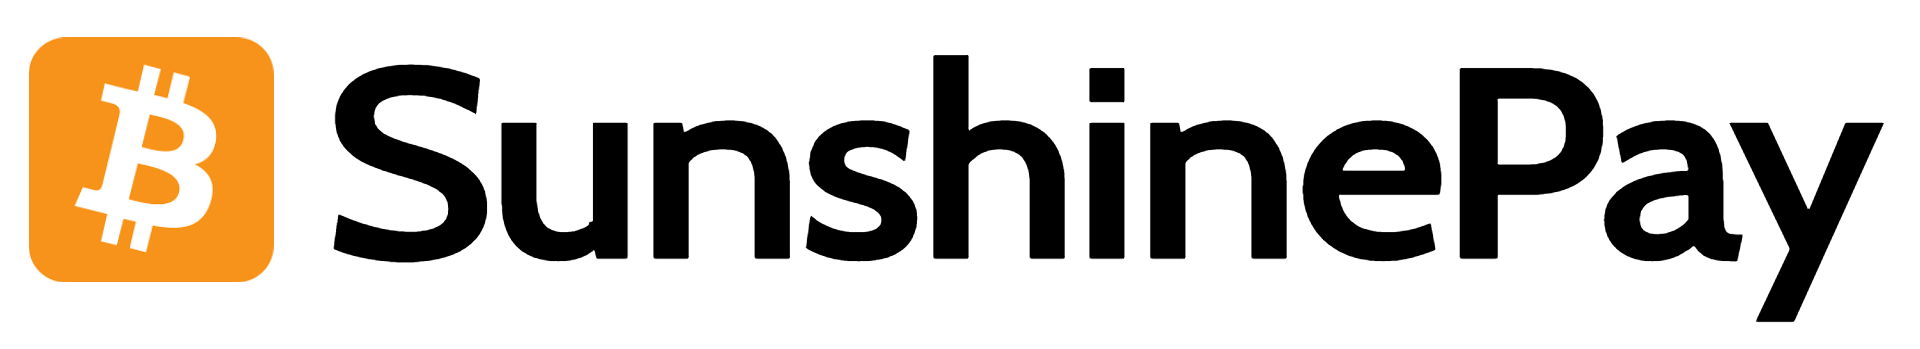 SunshinePay logo